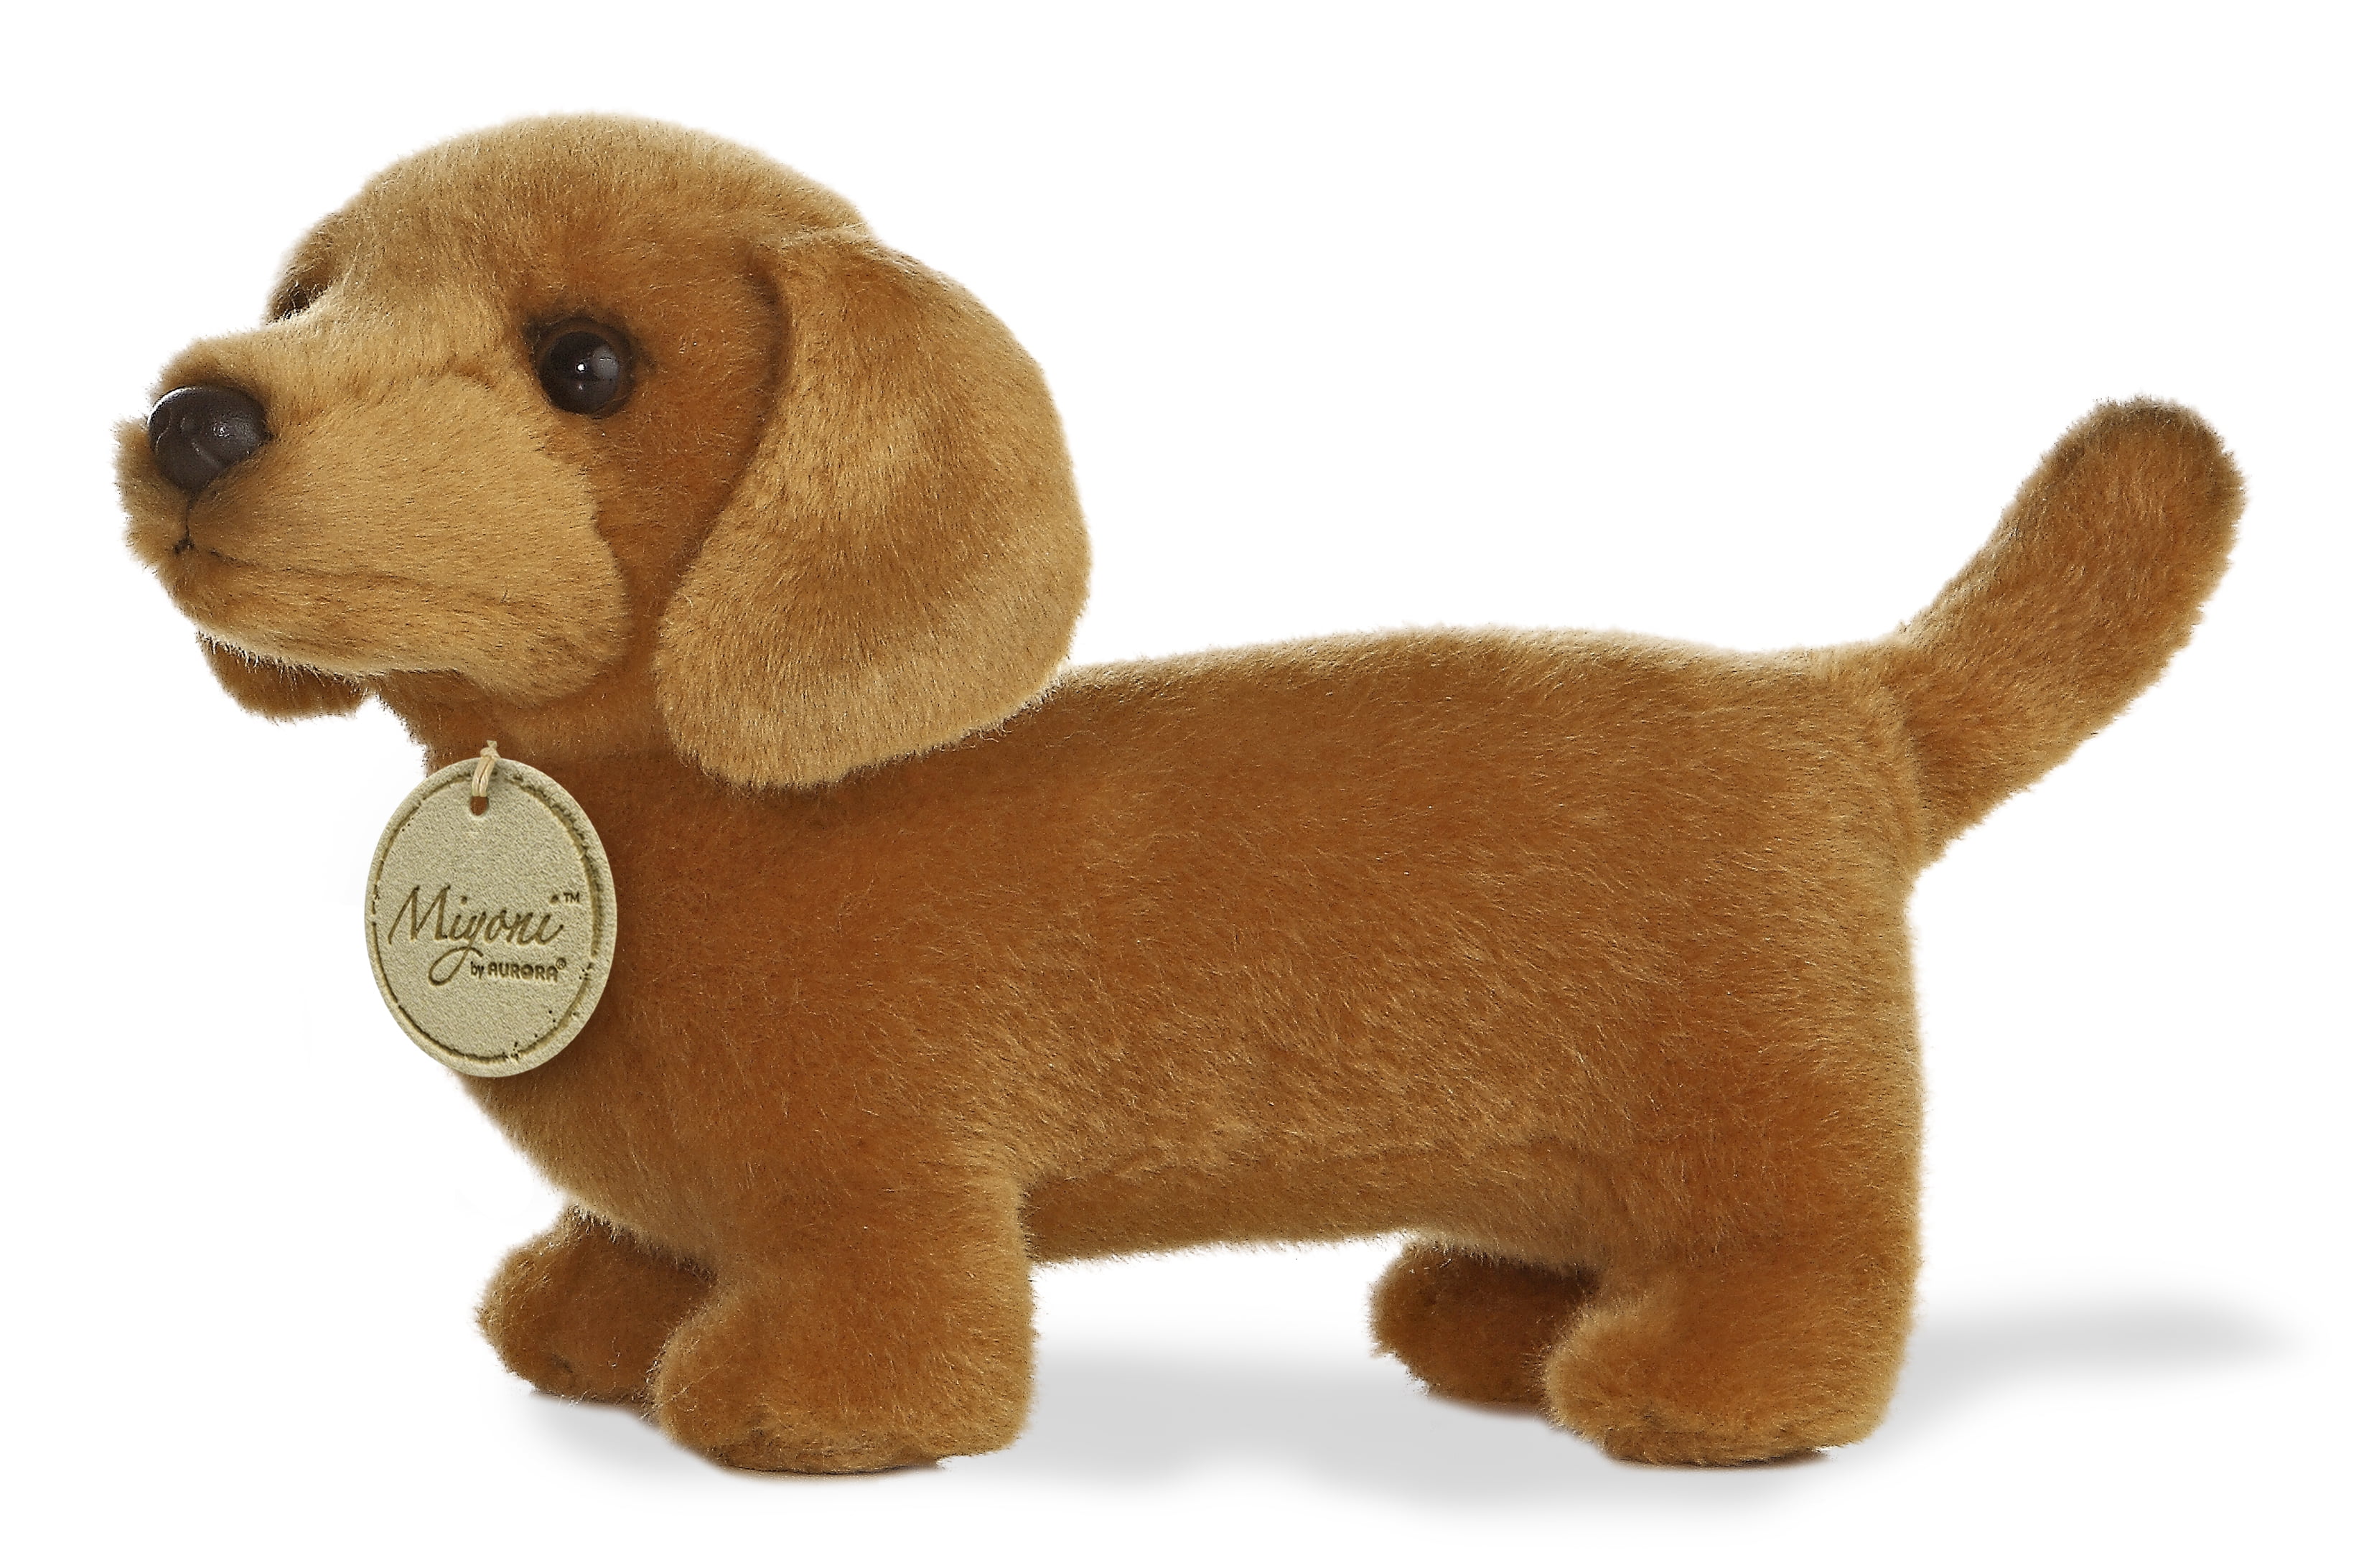 mini dachshund stuffed animal